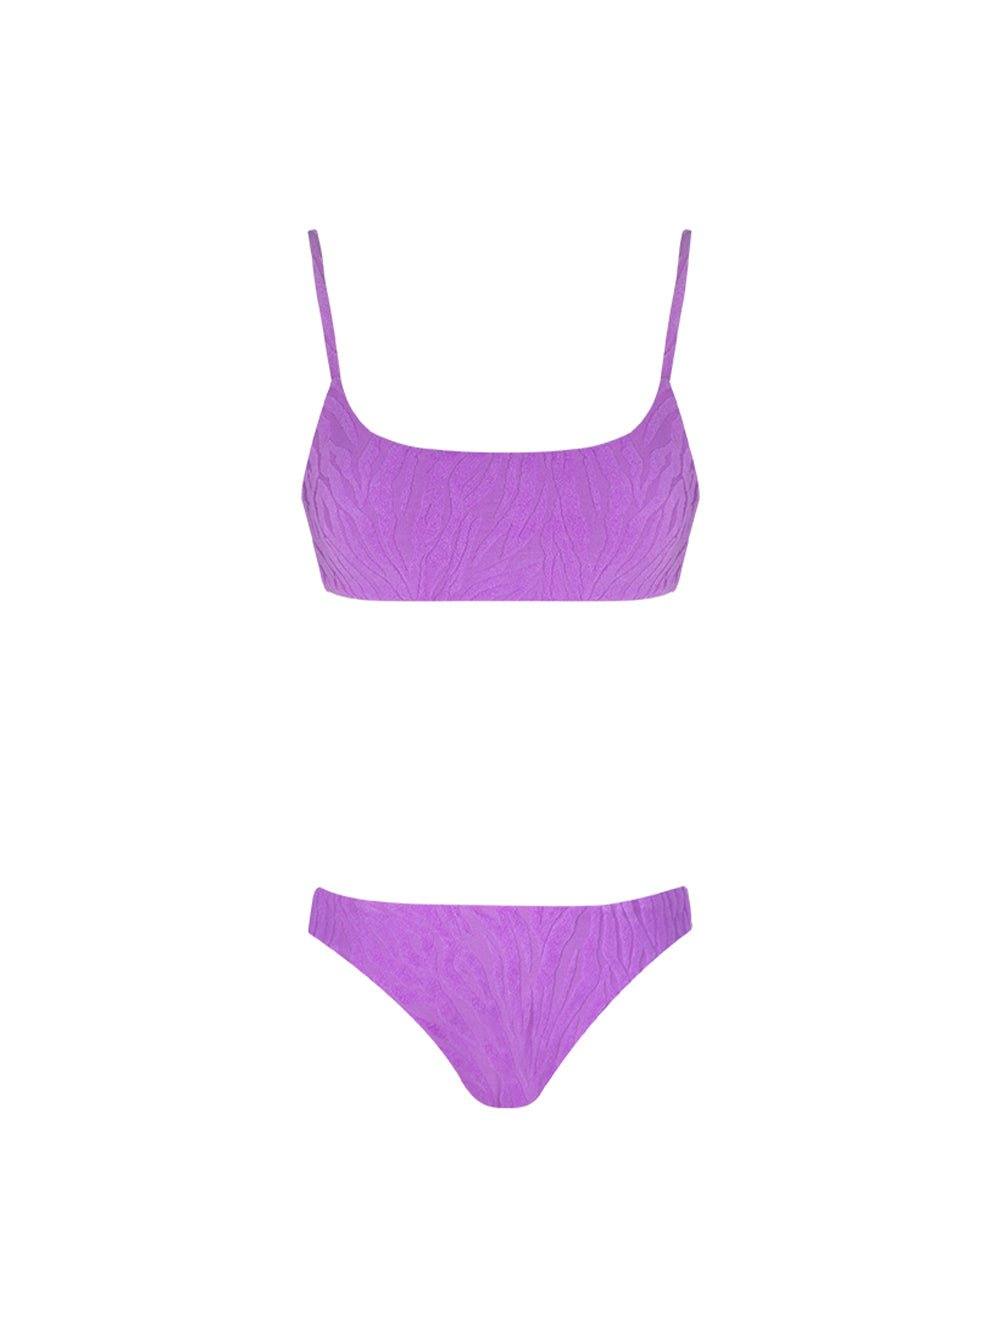 Jacquard Sexy Bikini - Violet - OCEAN MYSTERY